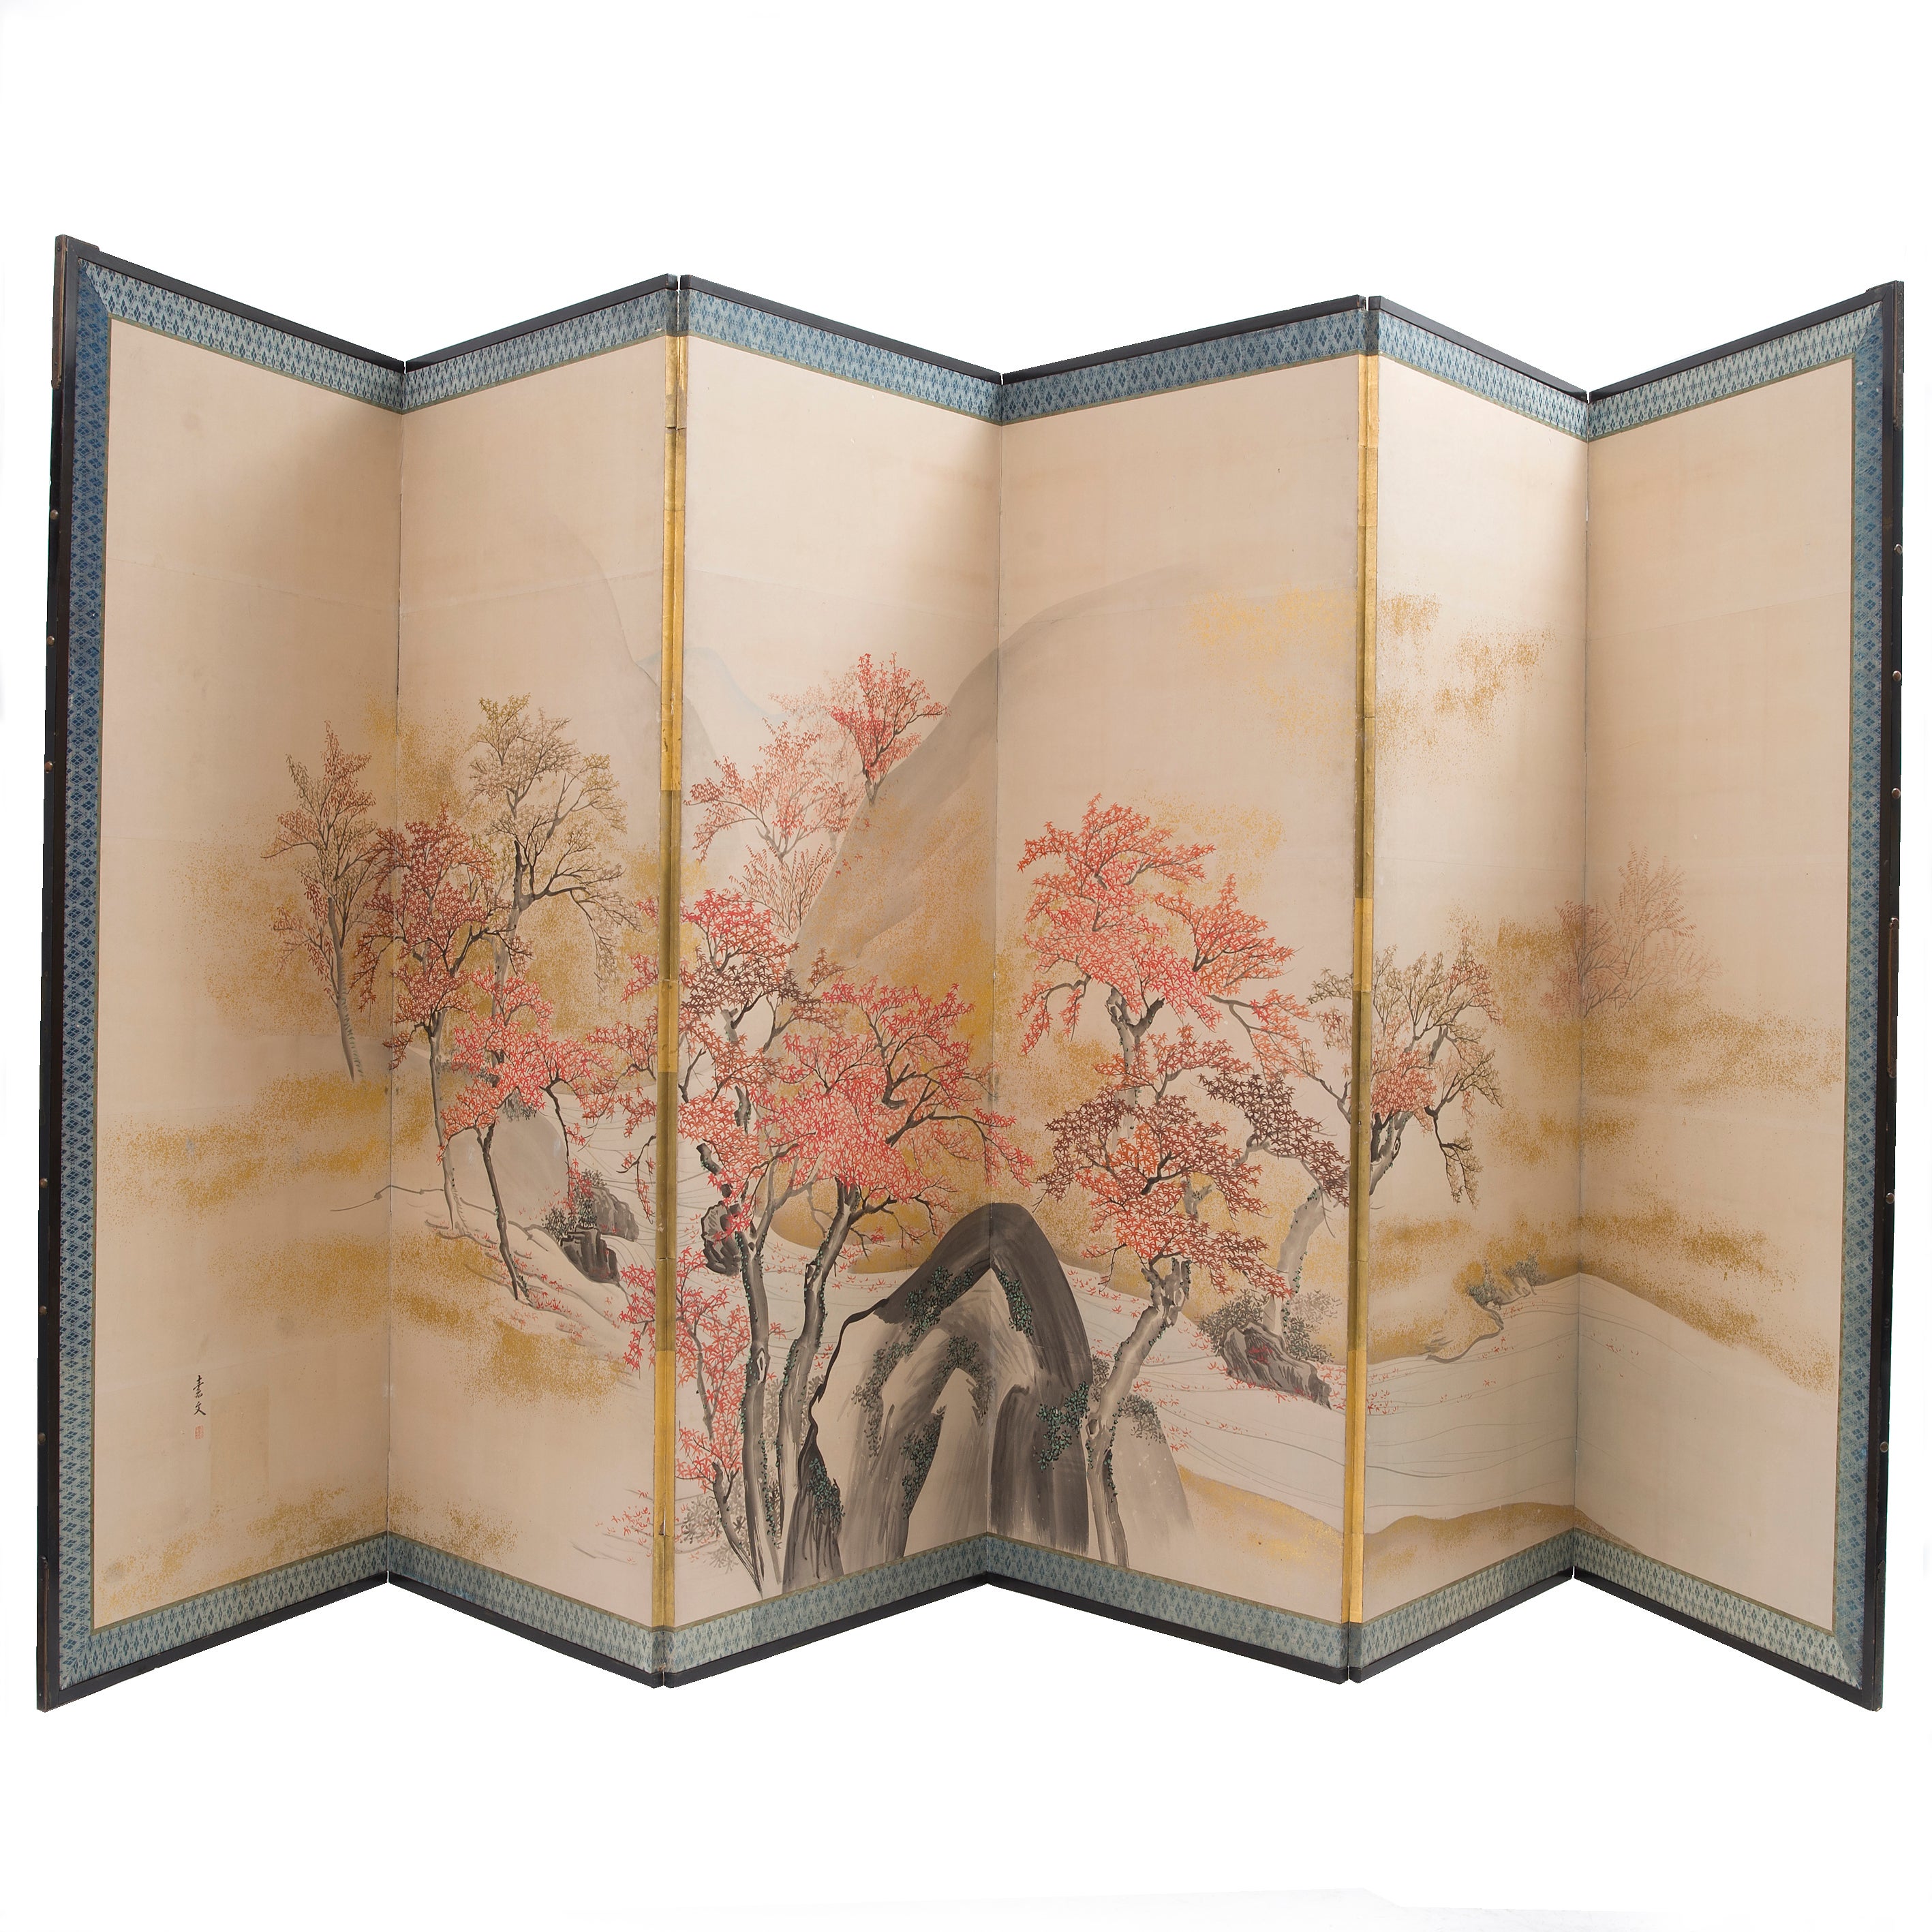 Japanese Six Fold Screen Depicting Maple Trees